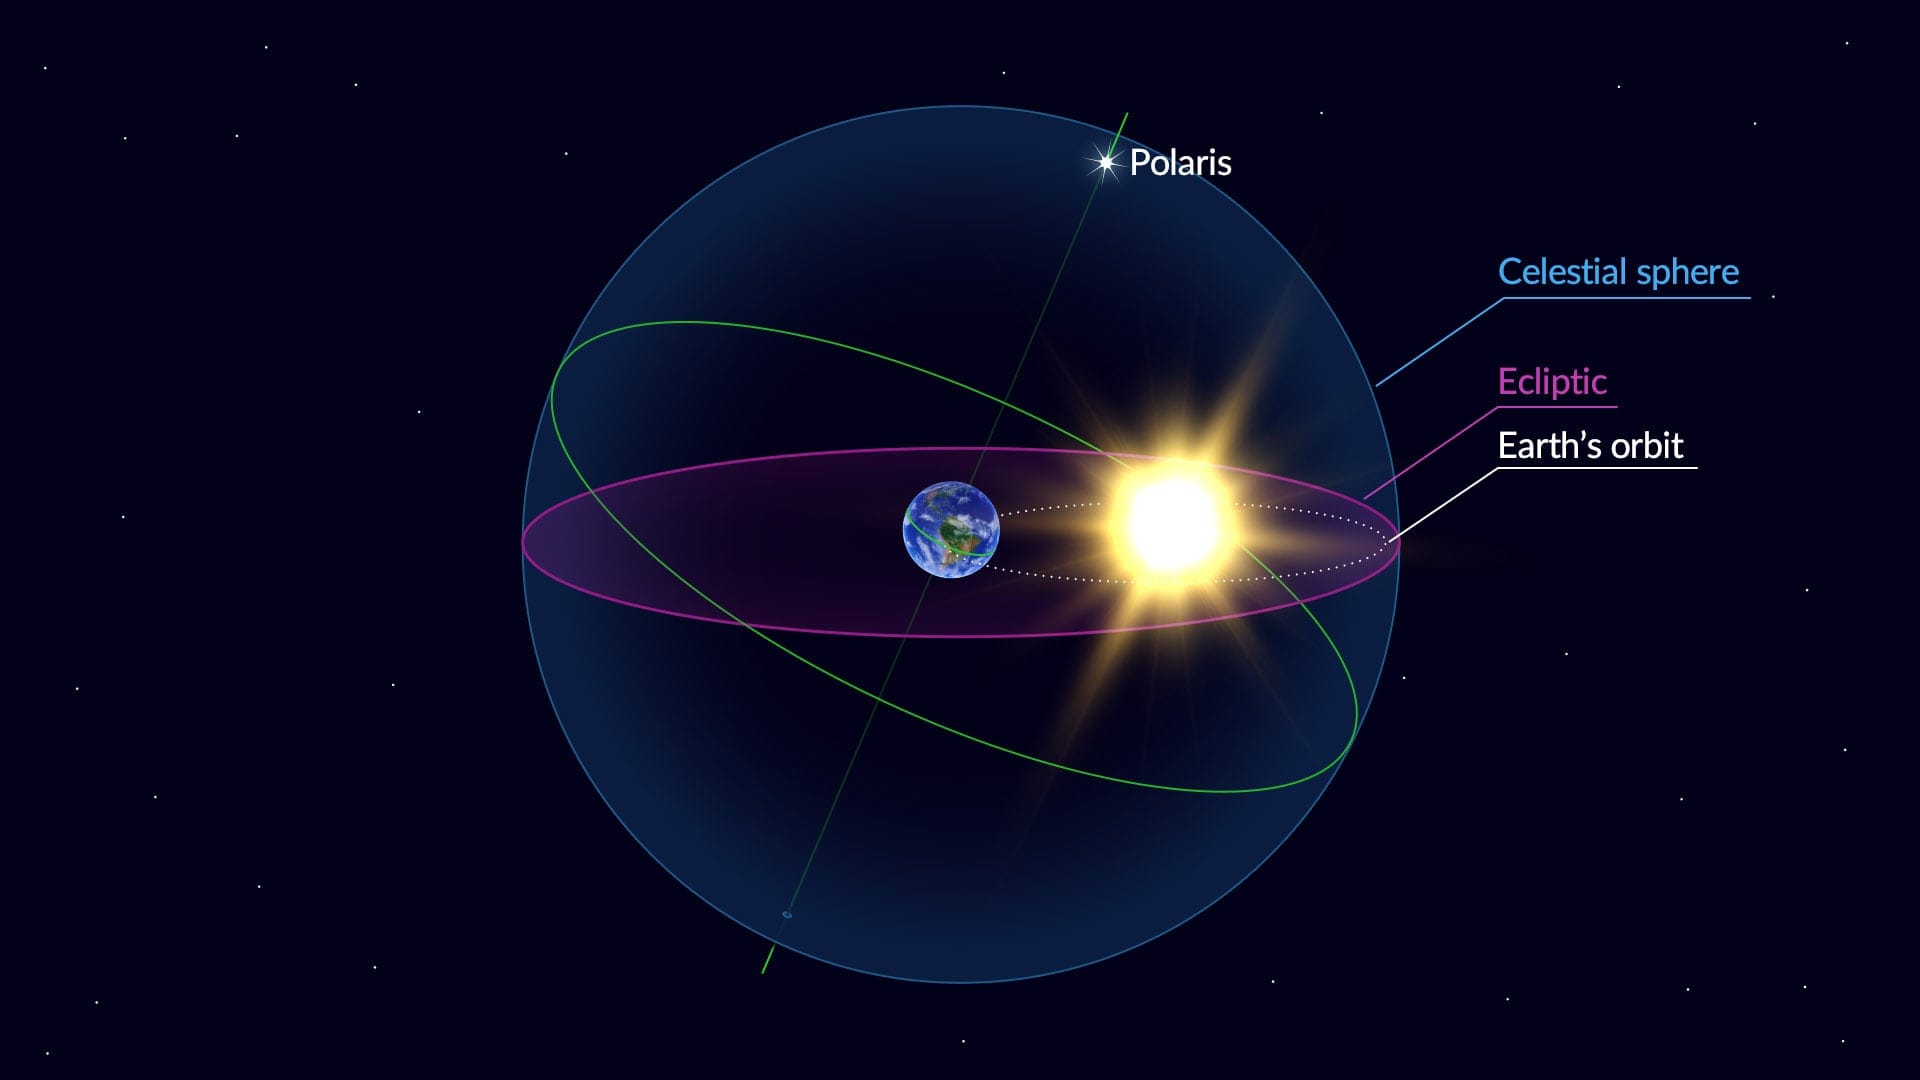 The ecliptic plane – the Earth’s orbital plane